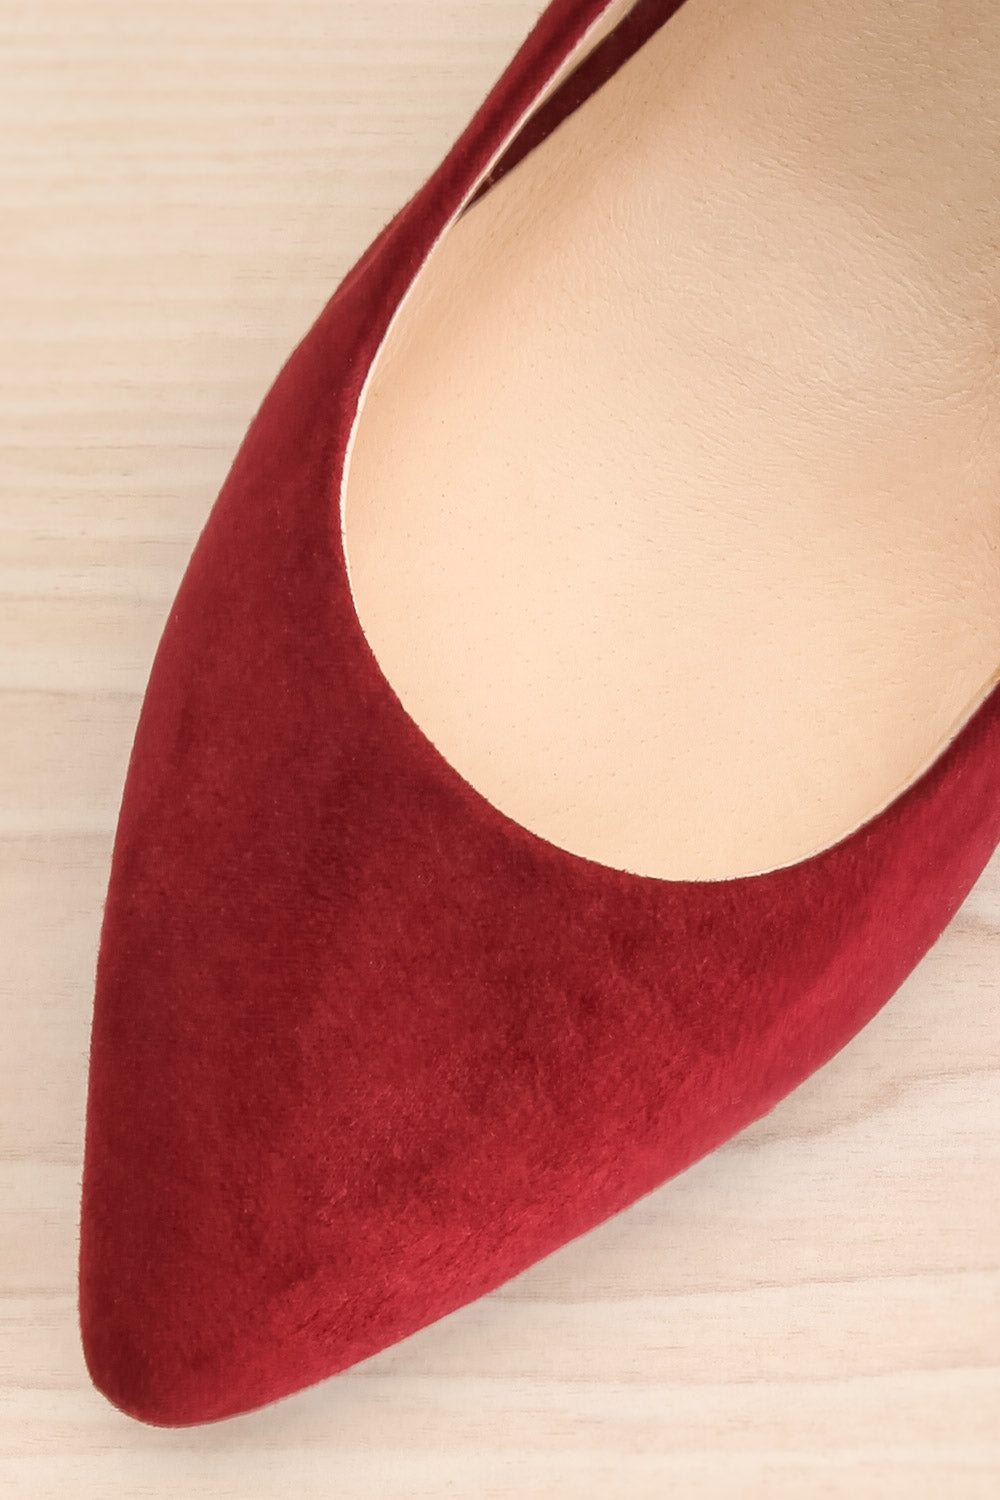 Vouvray Burgundy Suede Pointed Toe Heels | La petite garçonne flat close-up